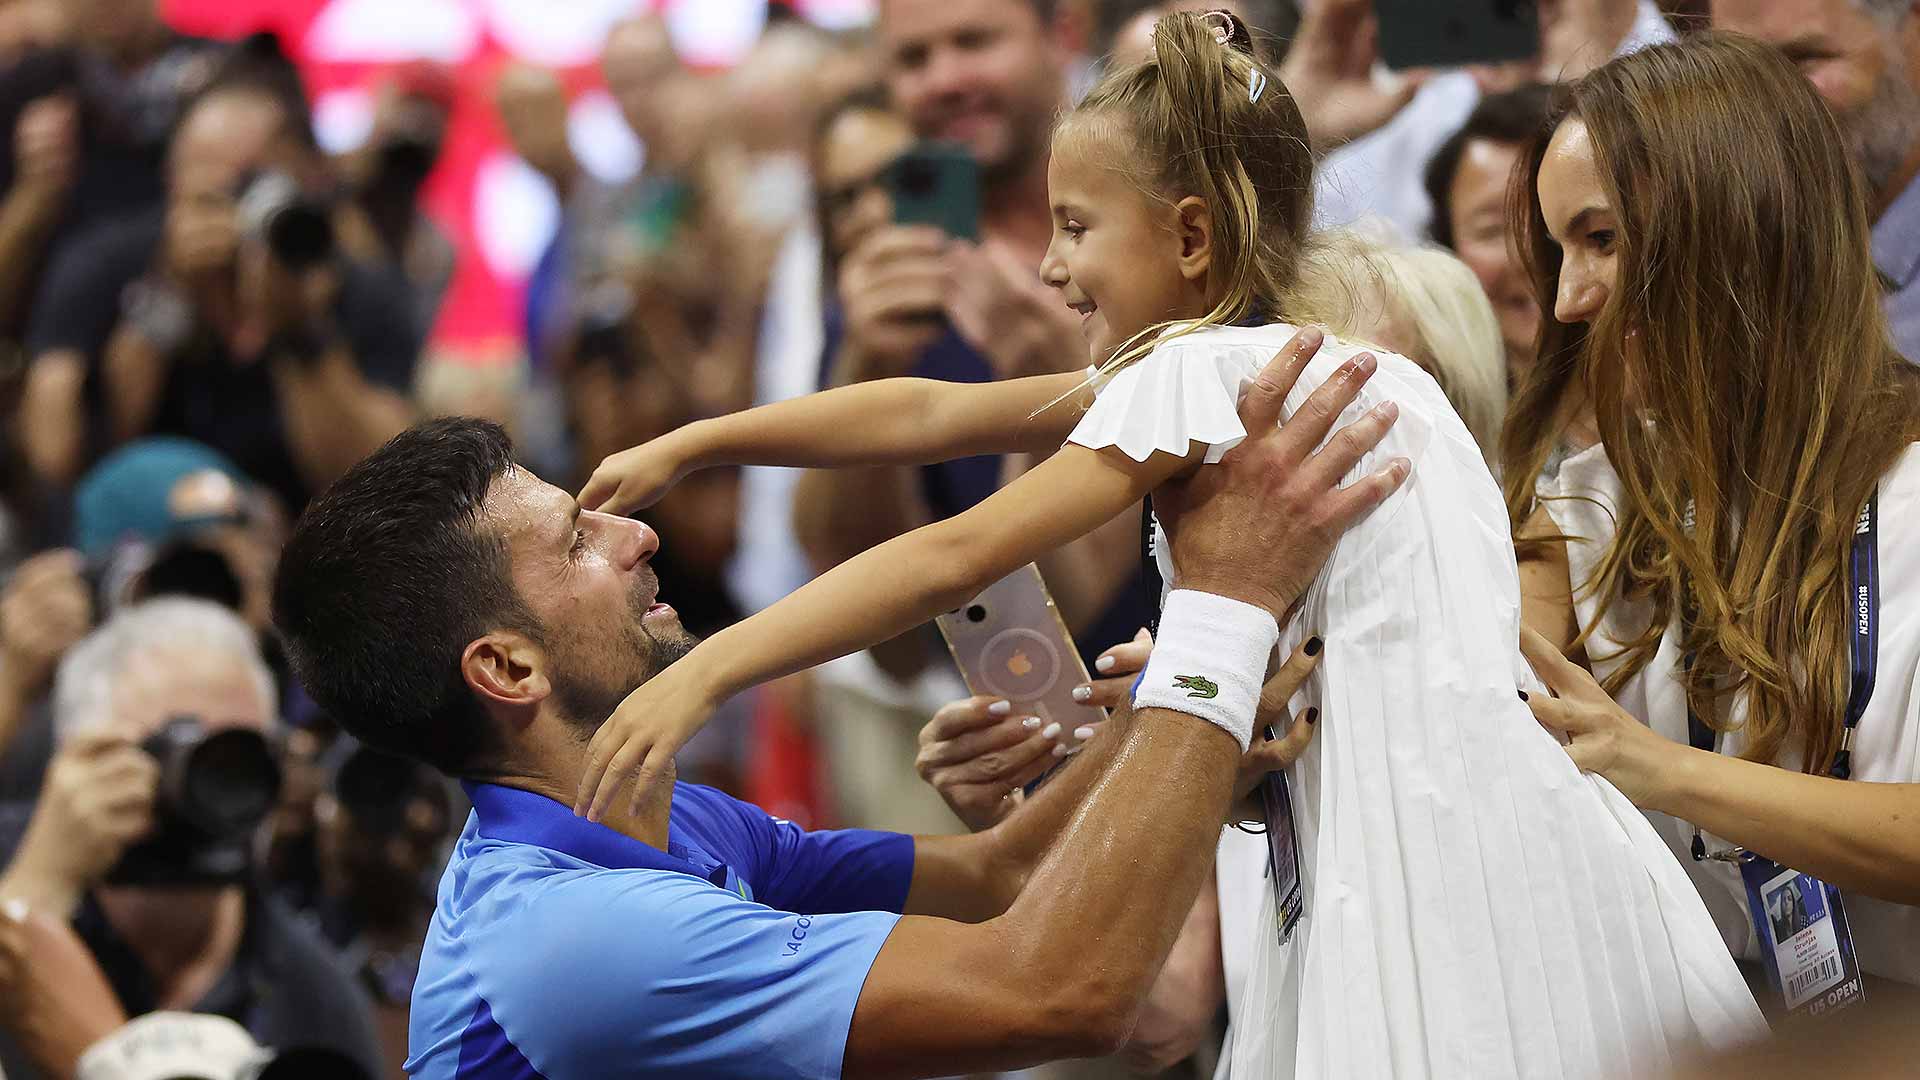 Novak Djokovic celebrated his fourth US Open title with daughter Tara.